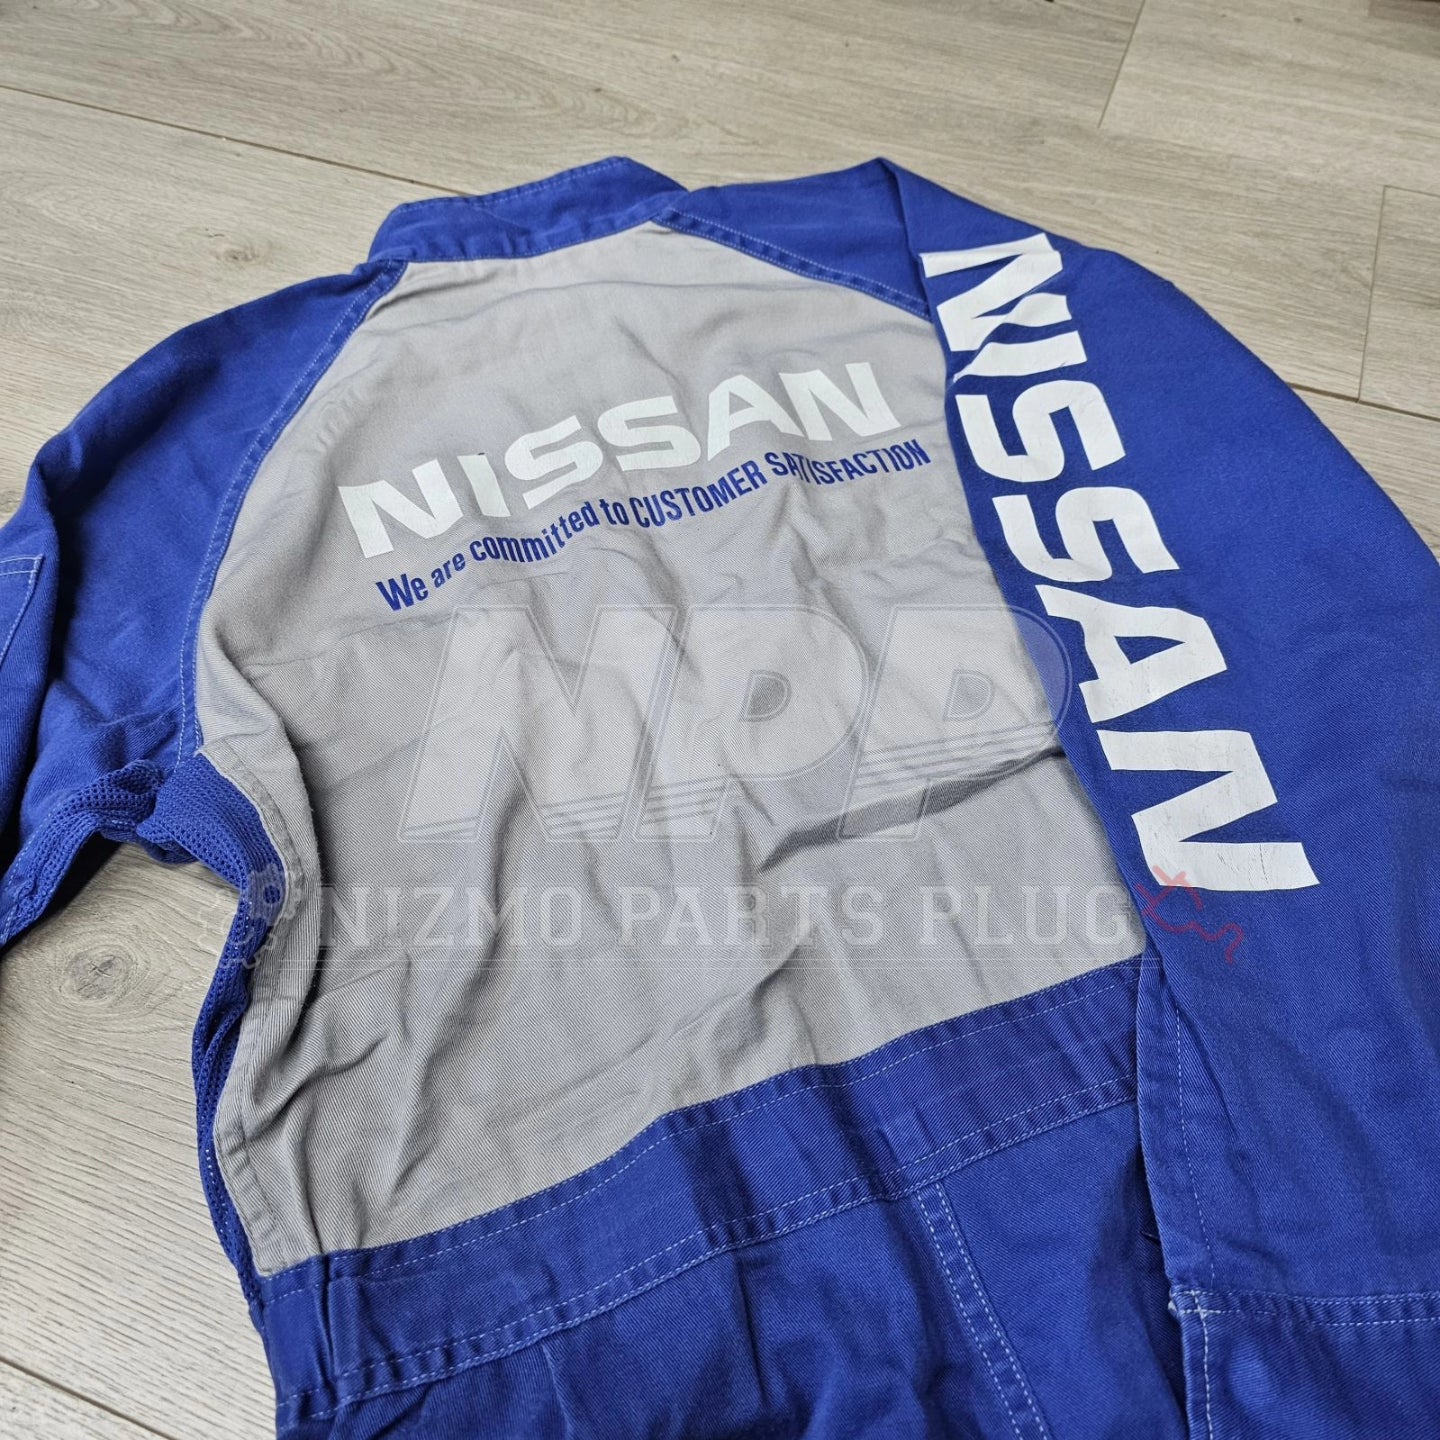 AuthenticWear Japan Nissan Altia Mechanic Work Overalls Blue 2LL